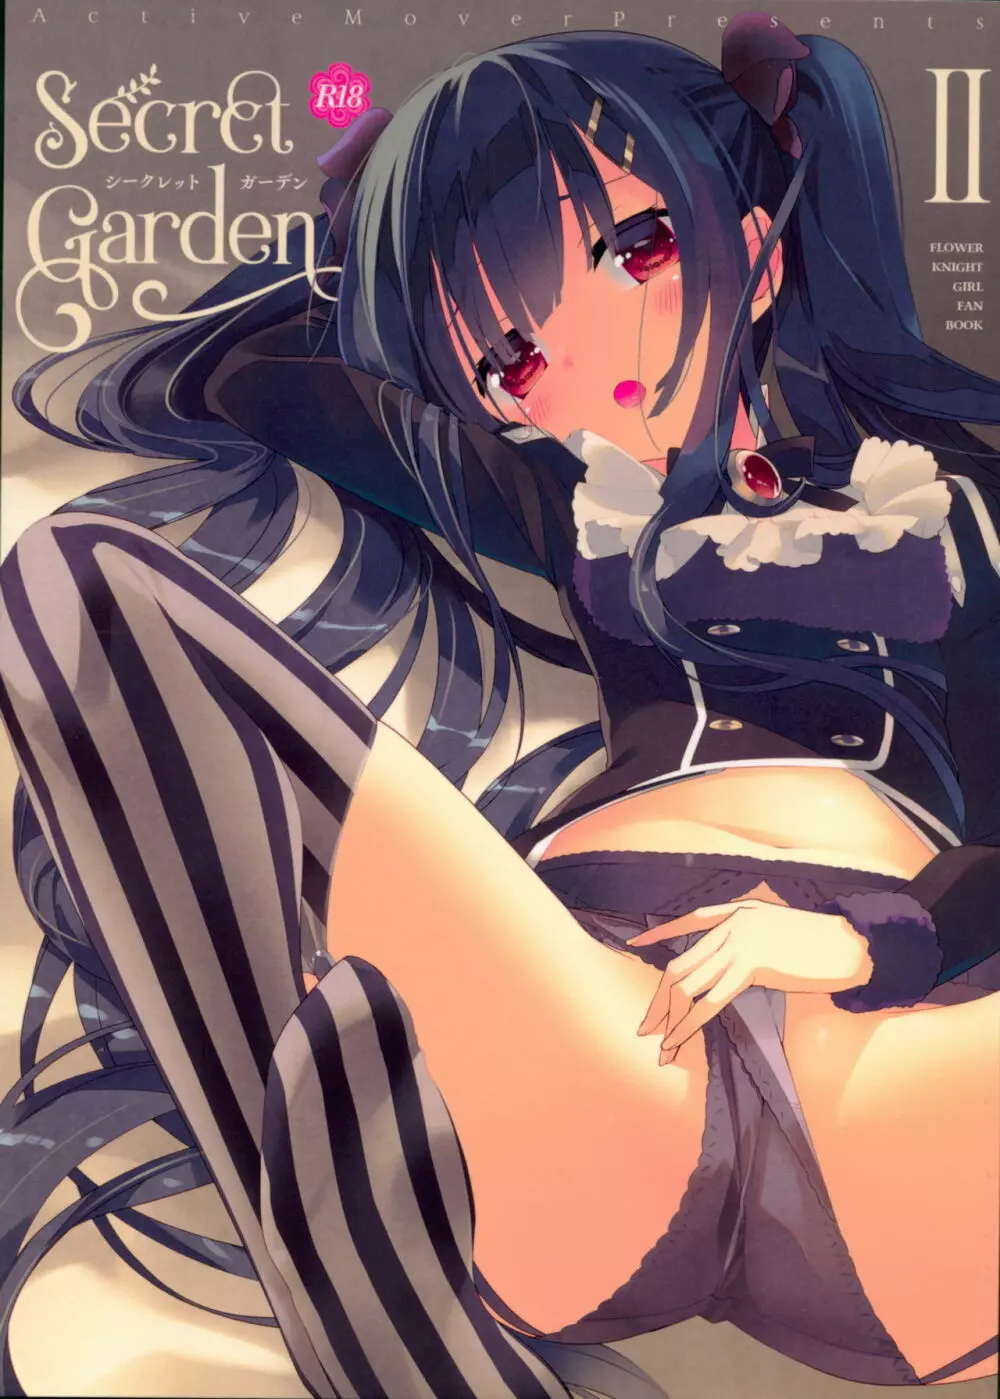 Secret garden 2